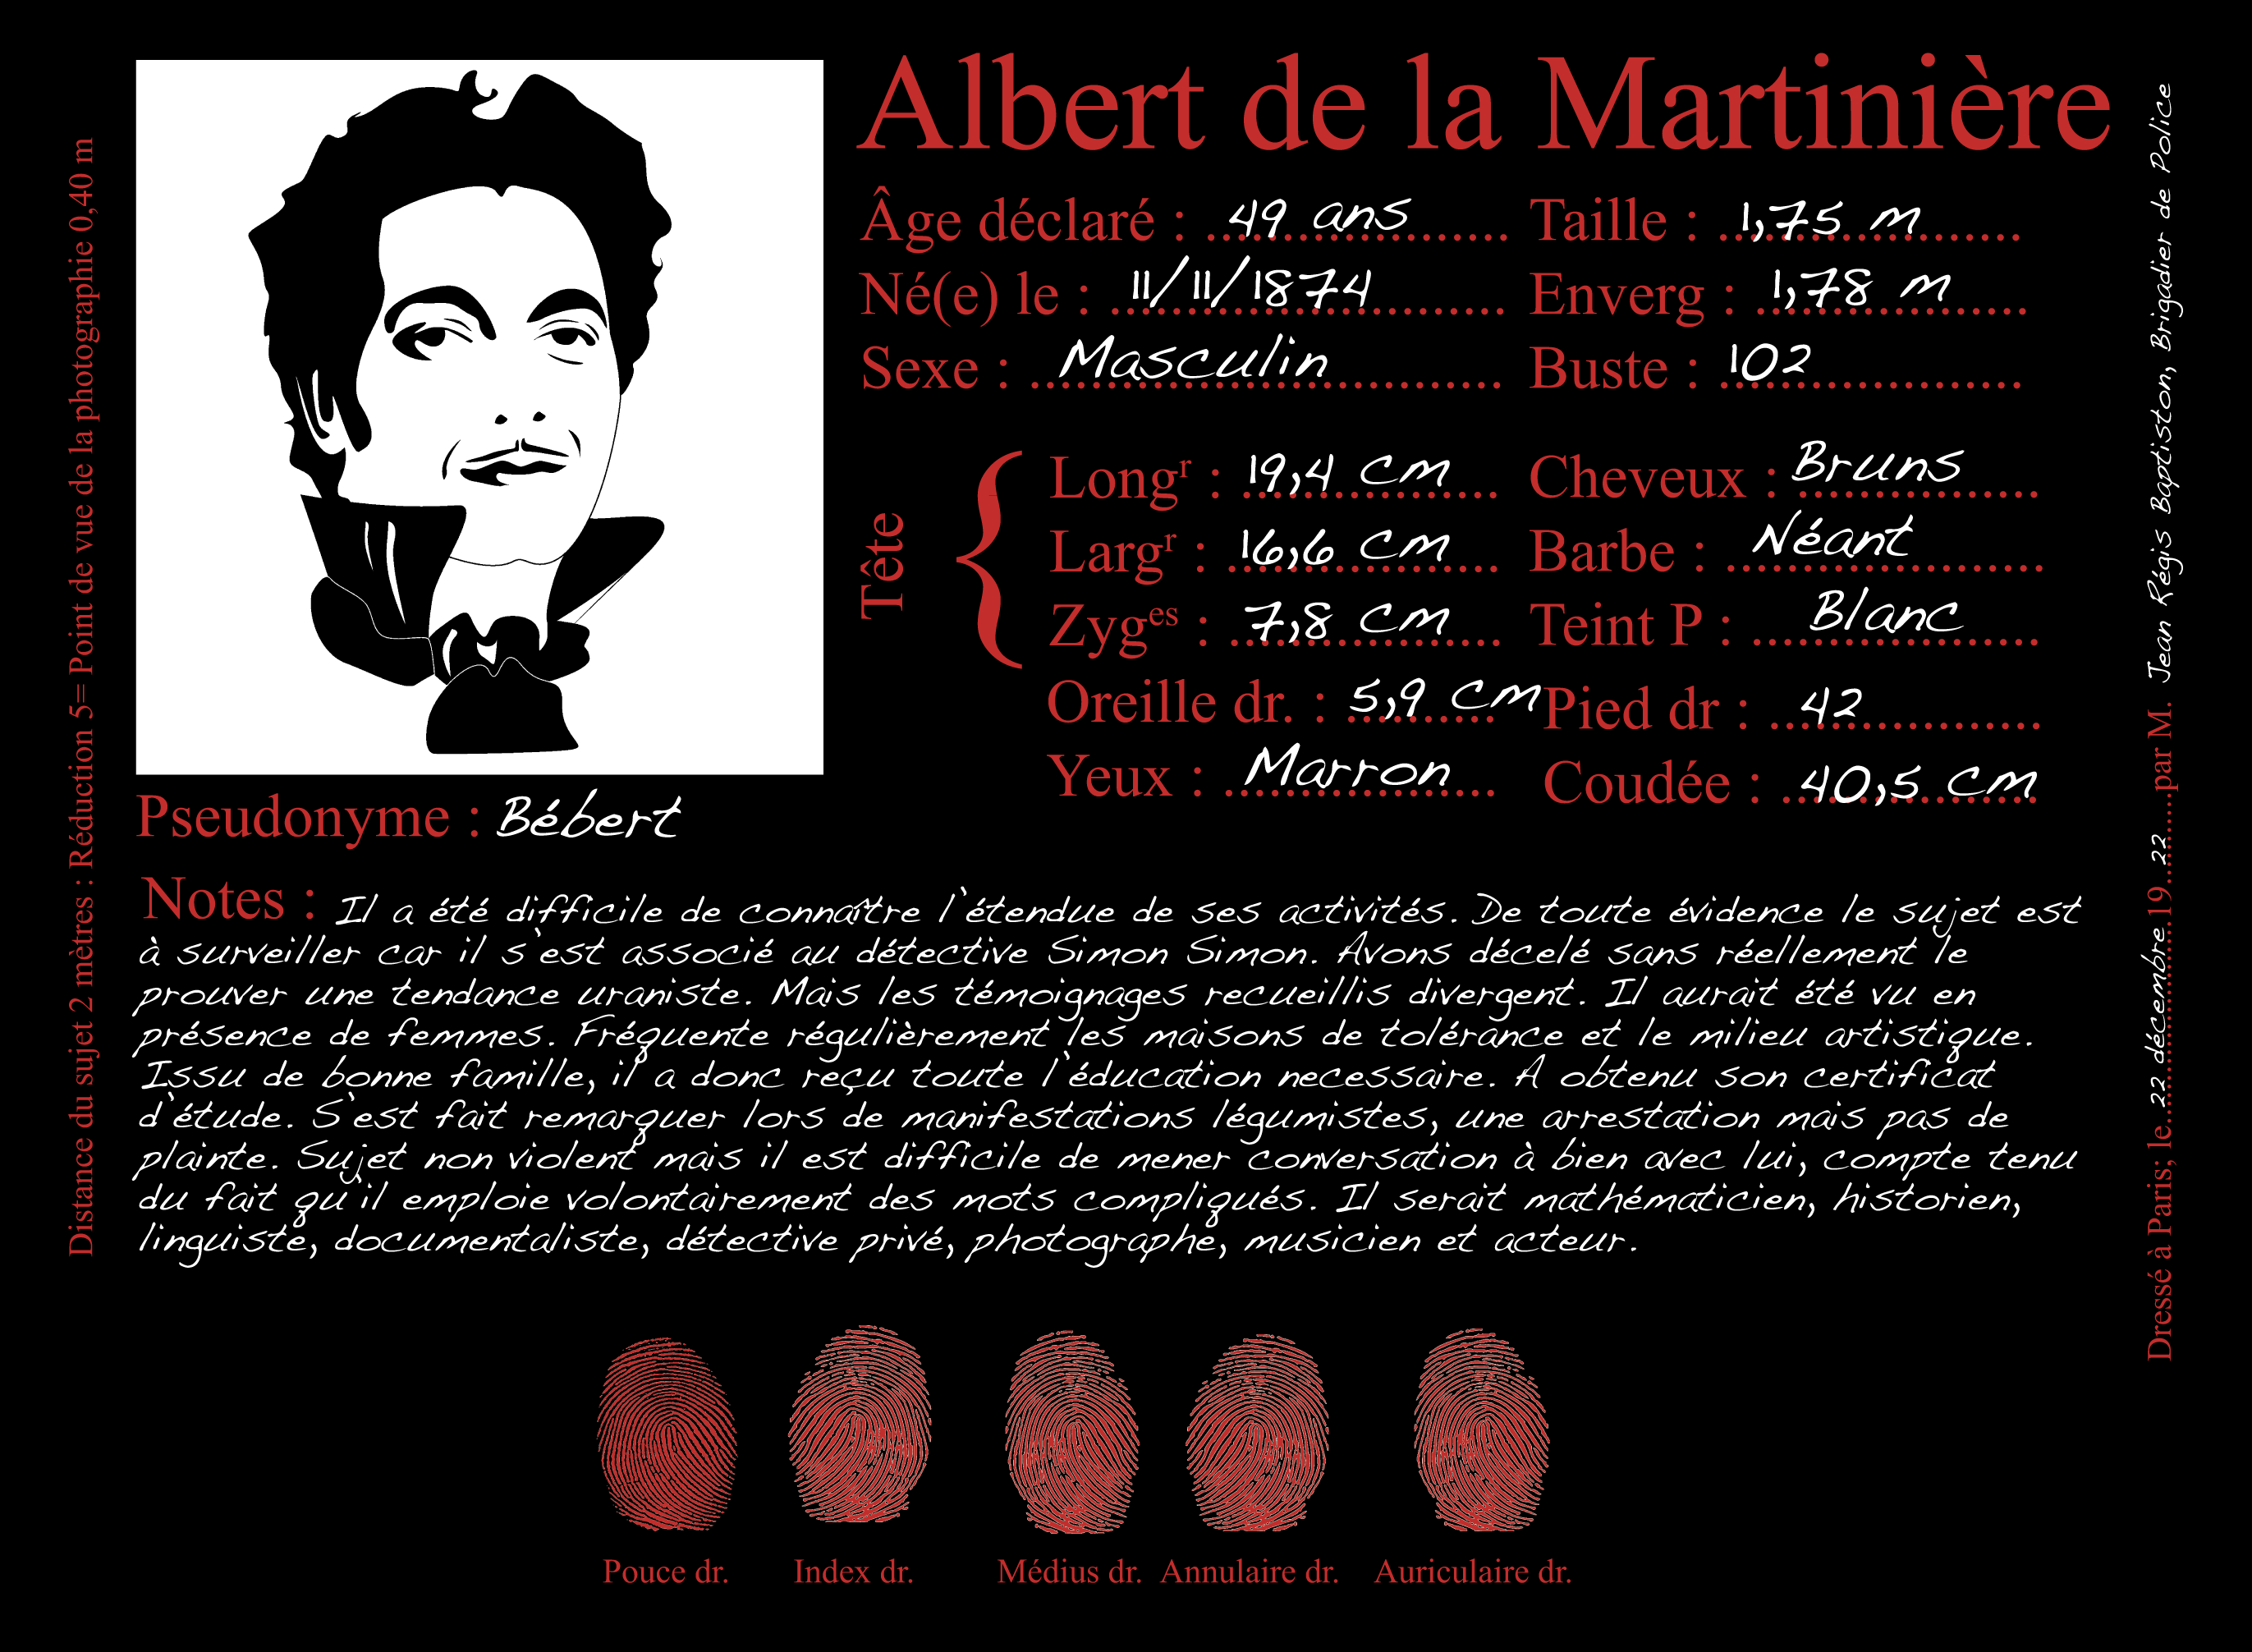 Albert de la Martinière dit Bebert